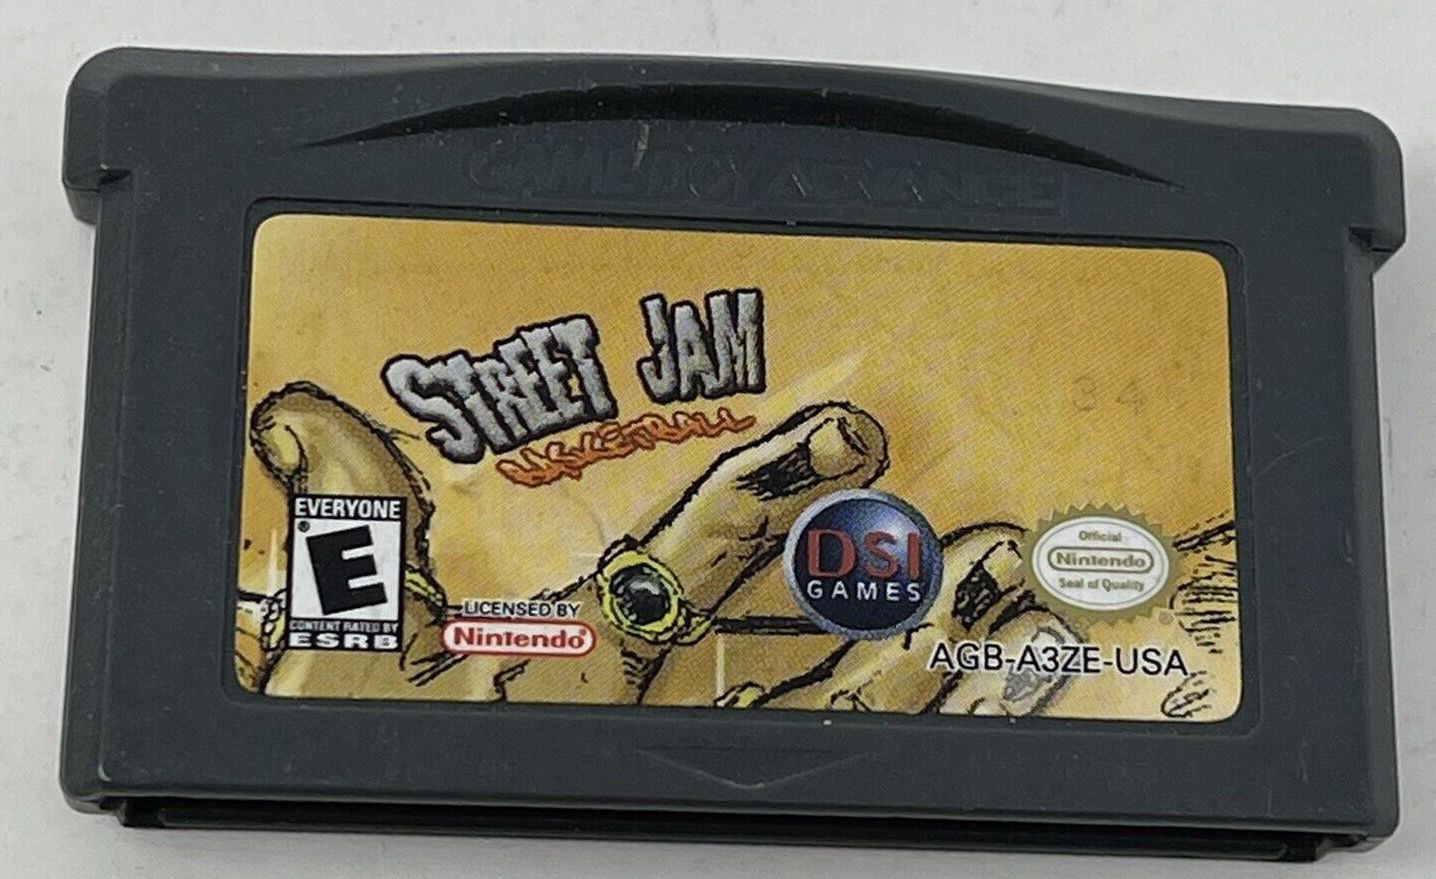 Street Jam Basketball - Game Boy Advance